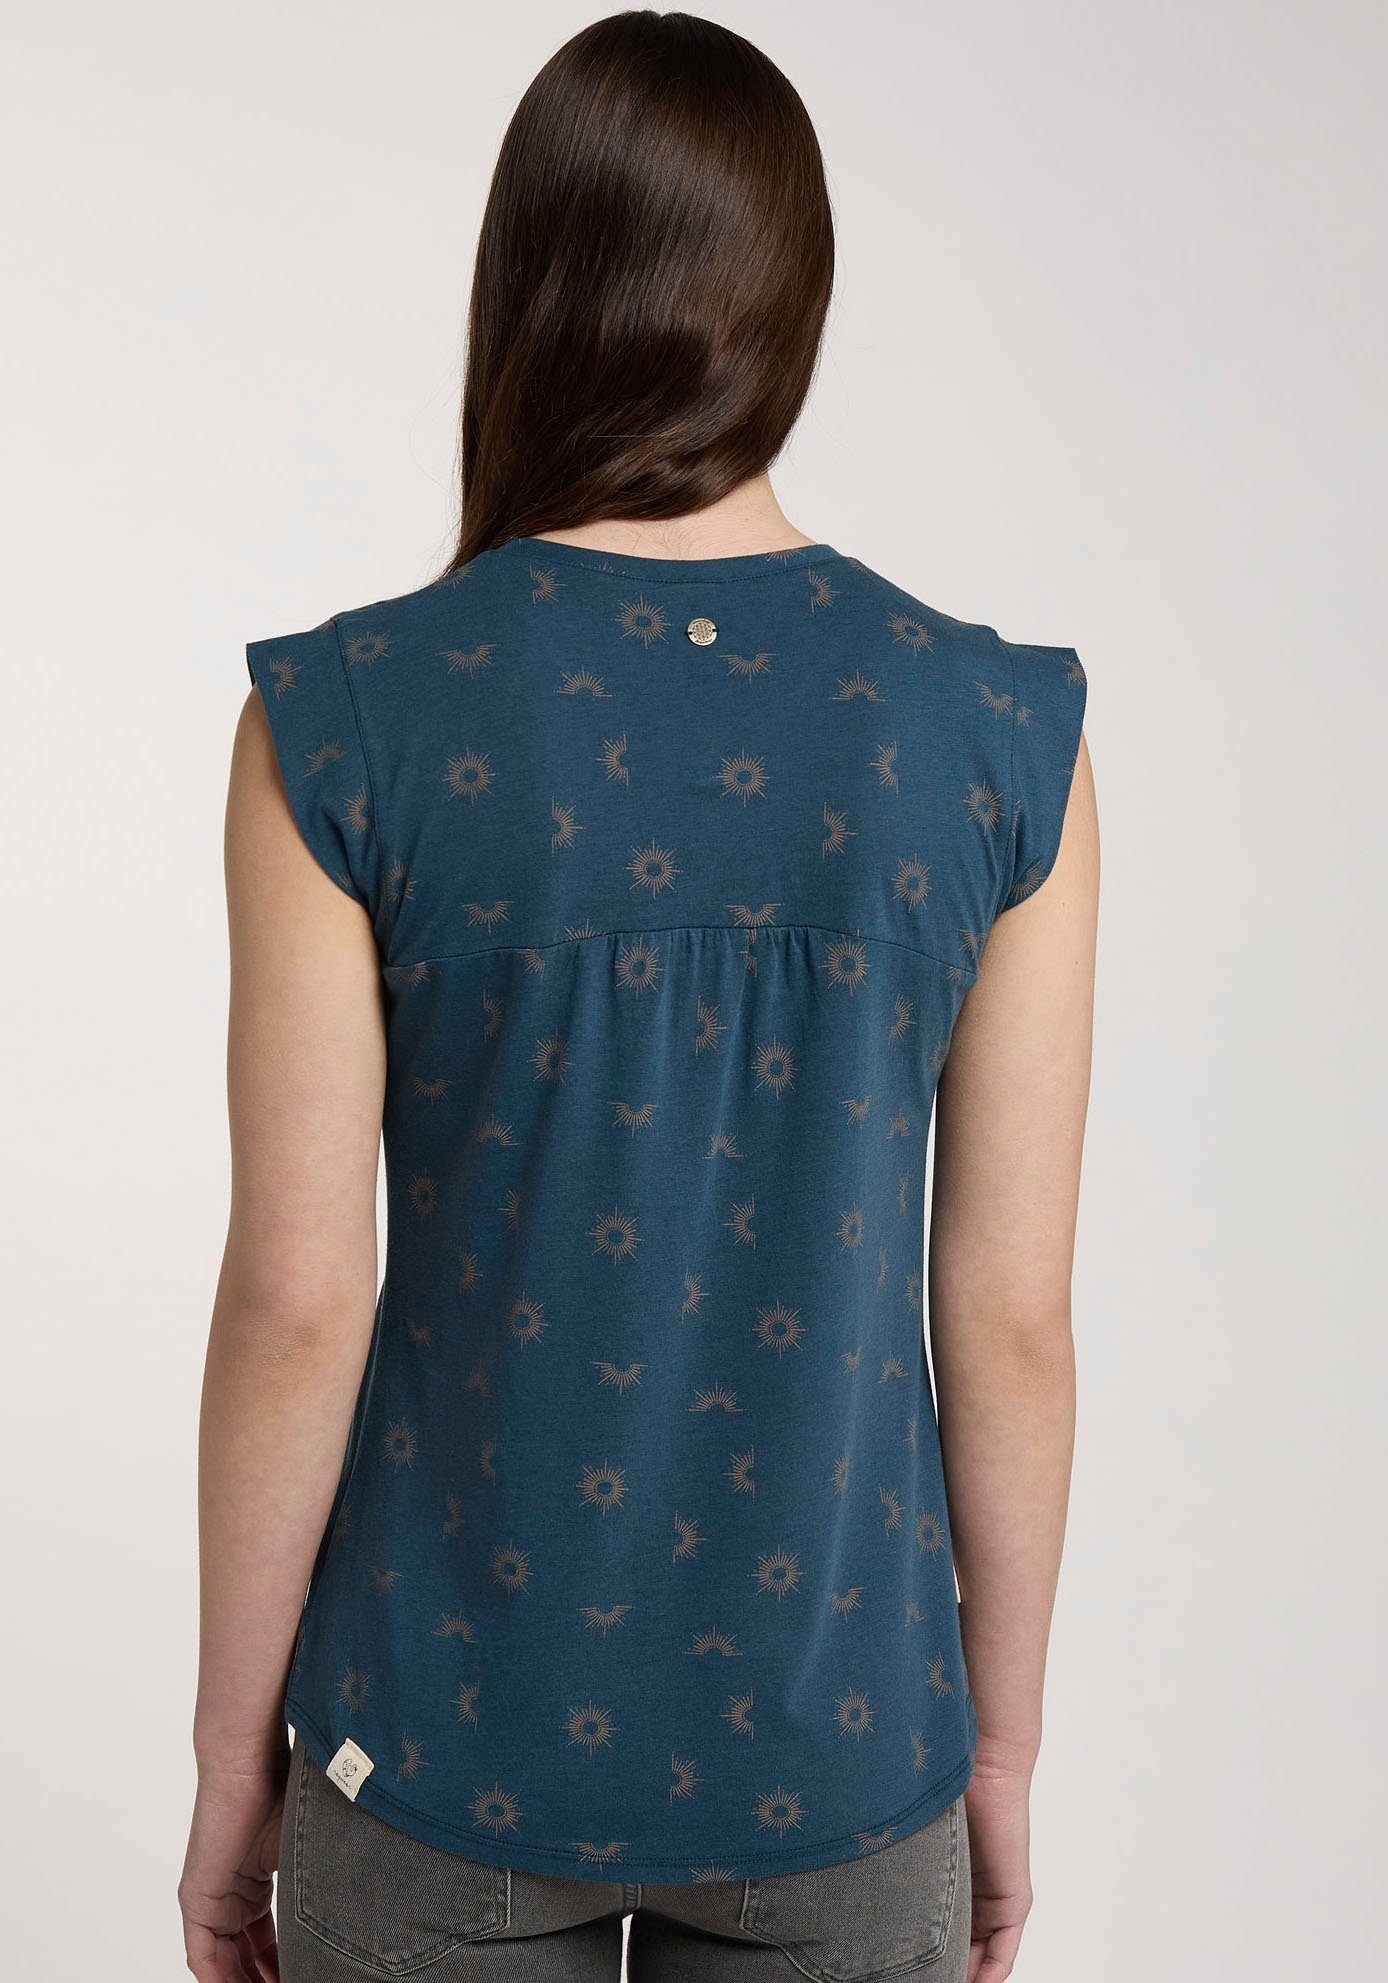 ORGANIC ZOFKA in Kurzarmshirt Allover-Sunshine-Print PETROL stylischem Ragwear